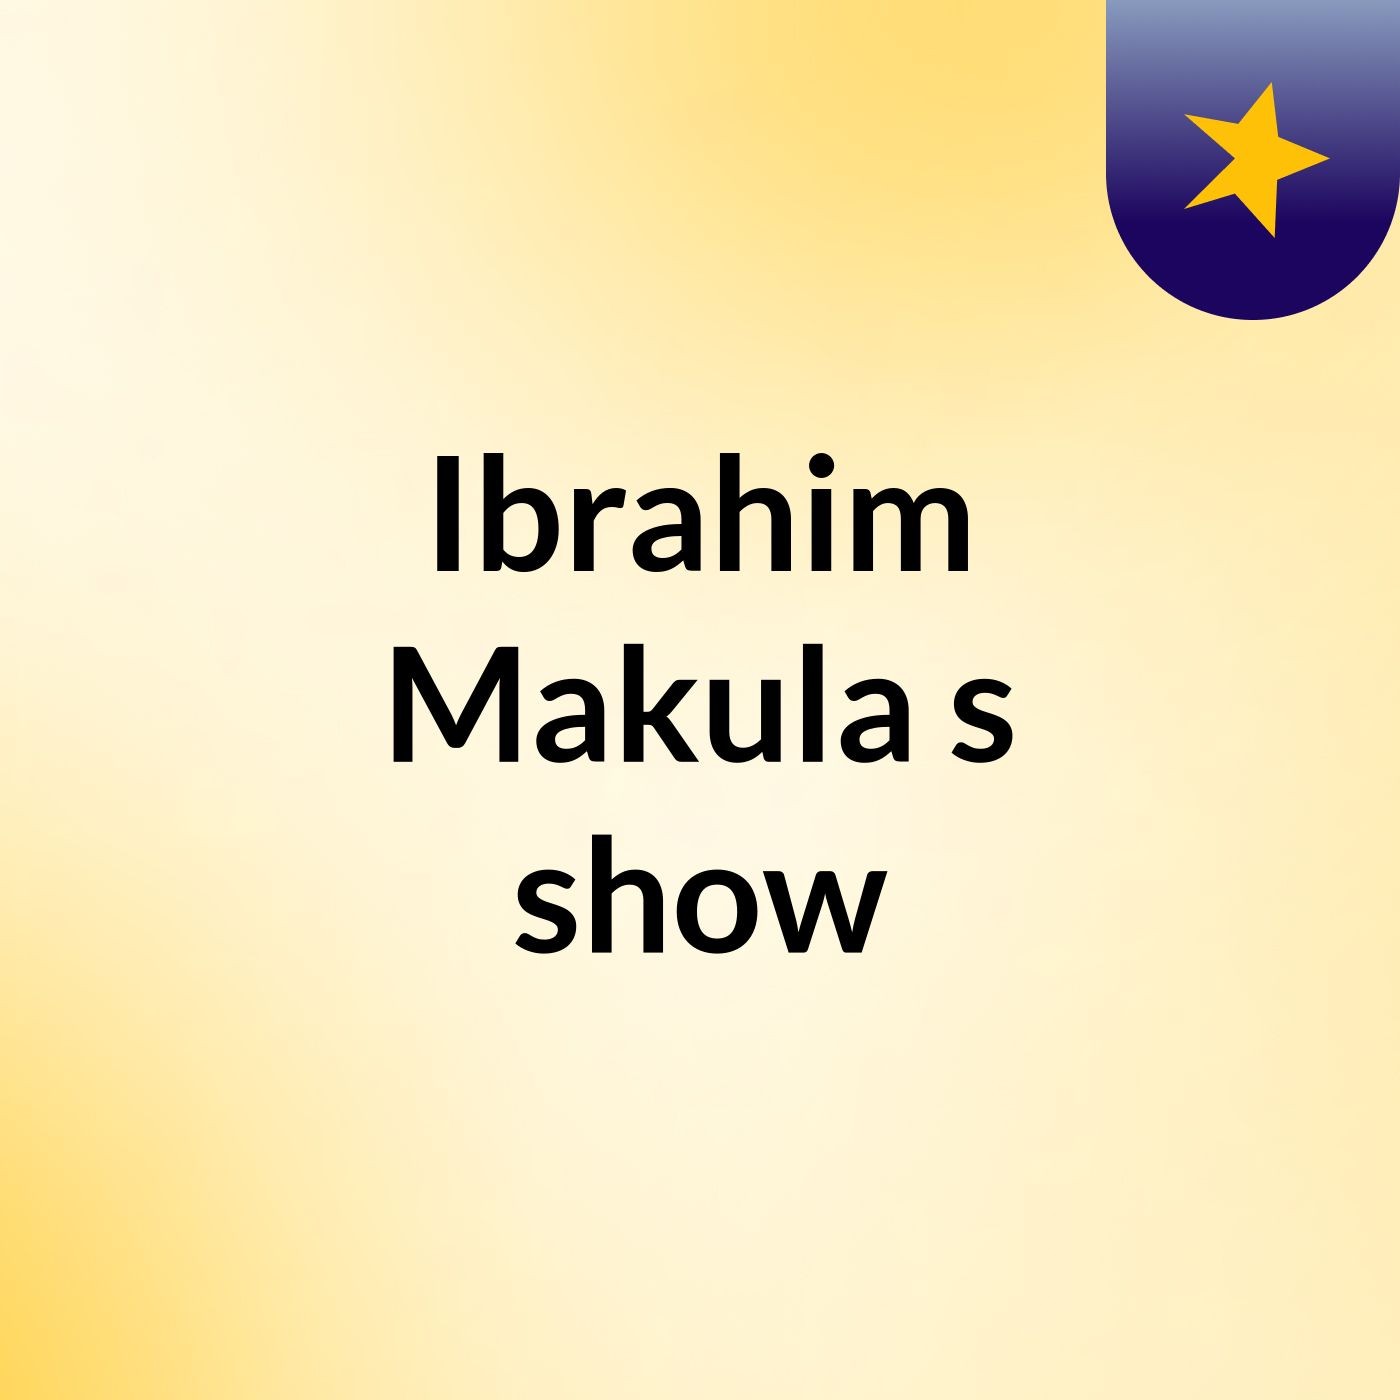 Episode 3 - Ibrahim Makula's show